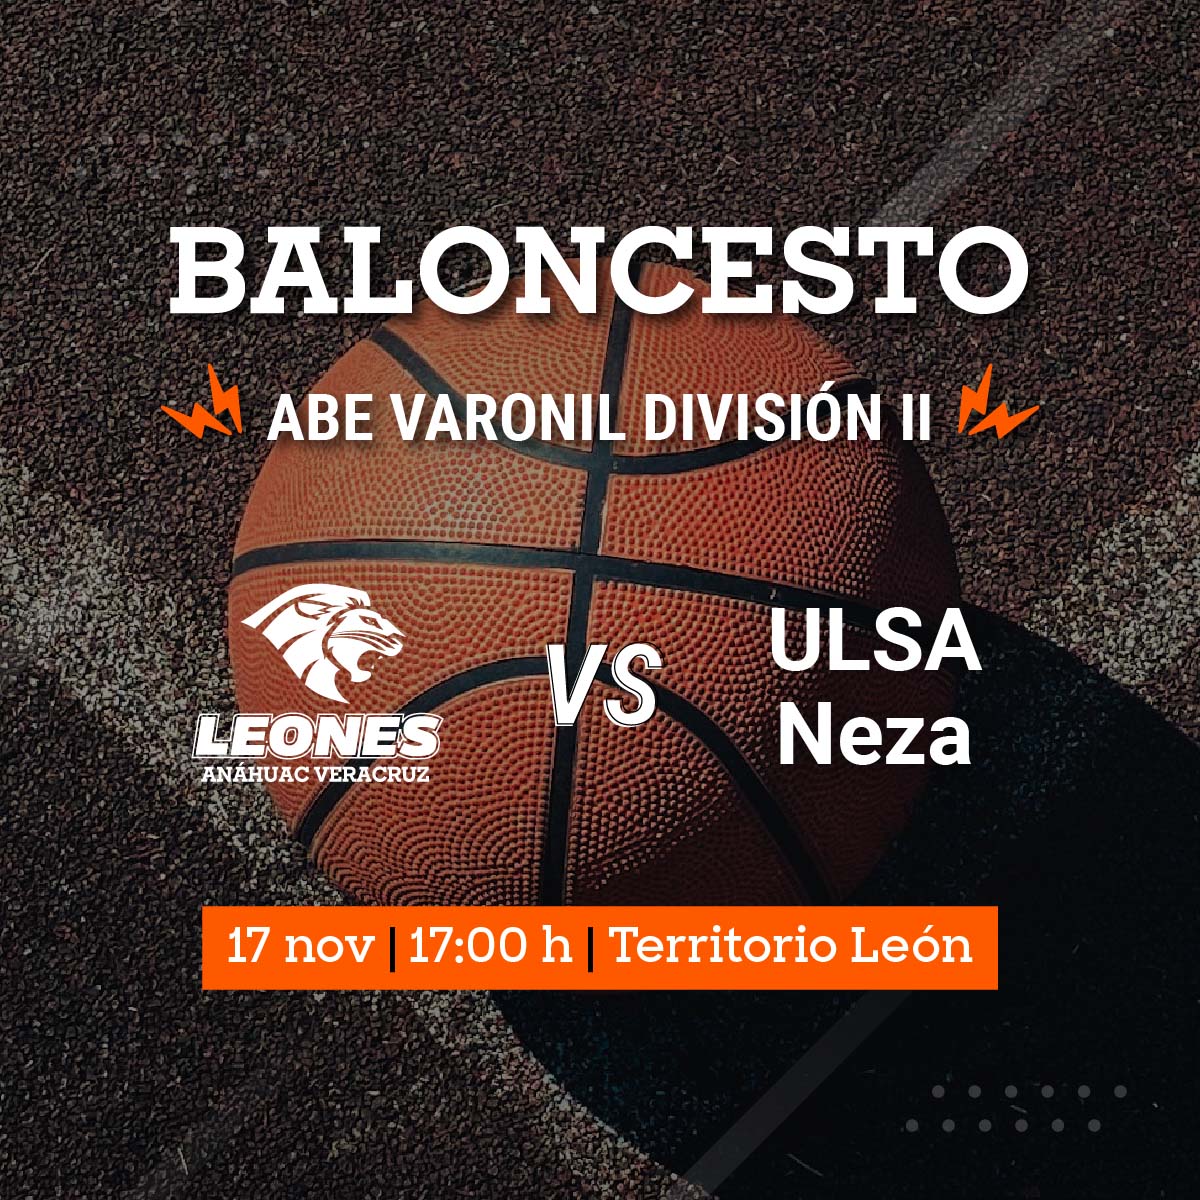 Baloncesto Varonil ABE: Leones vs ULSA Neza